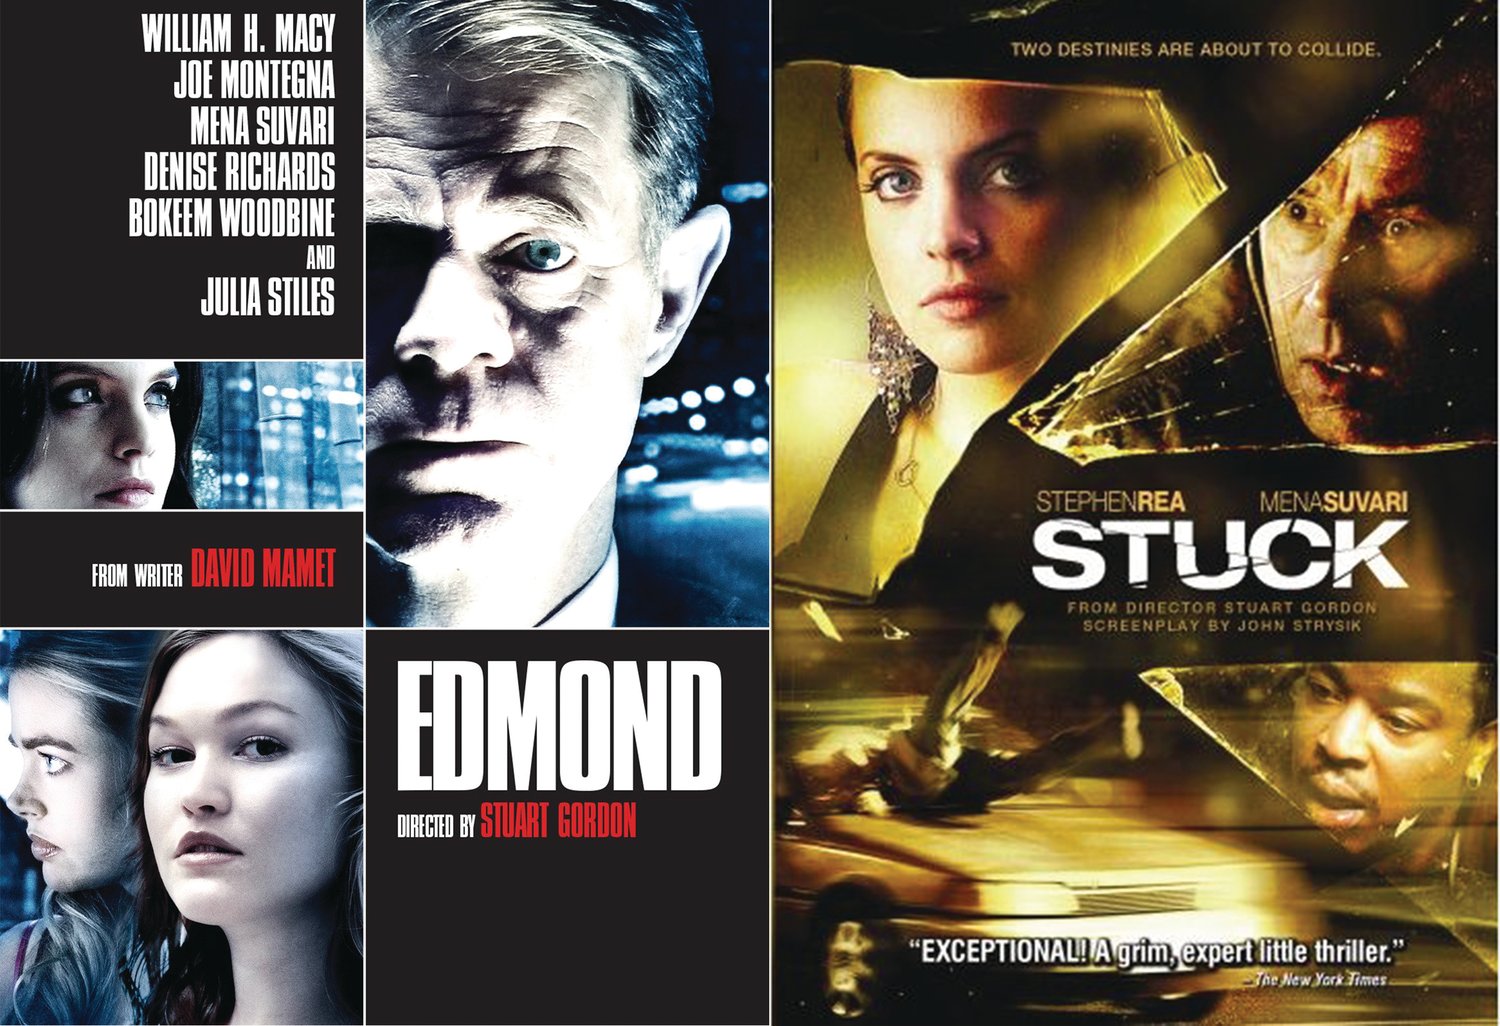 The final films directed by Stuart Gordon: “Edmond” (2005) and “Stuck” (2007).